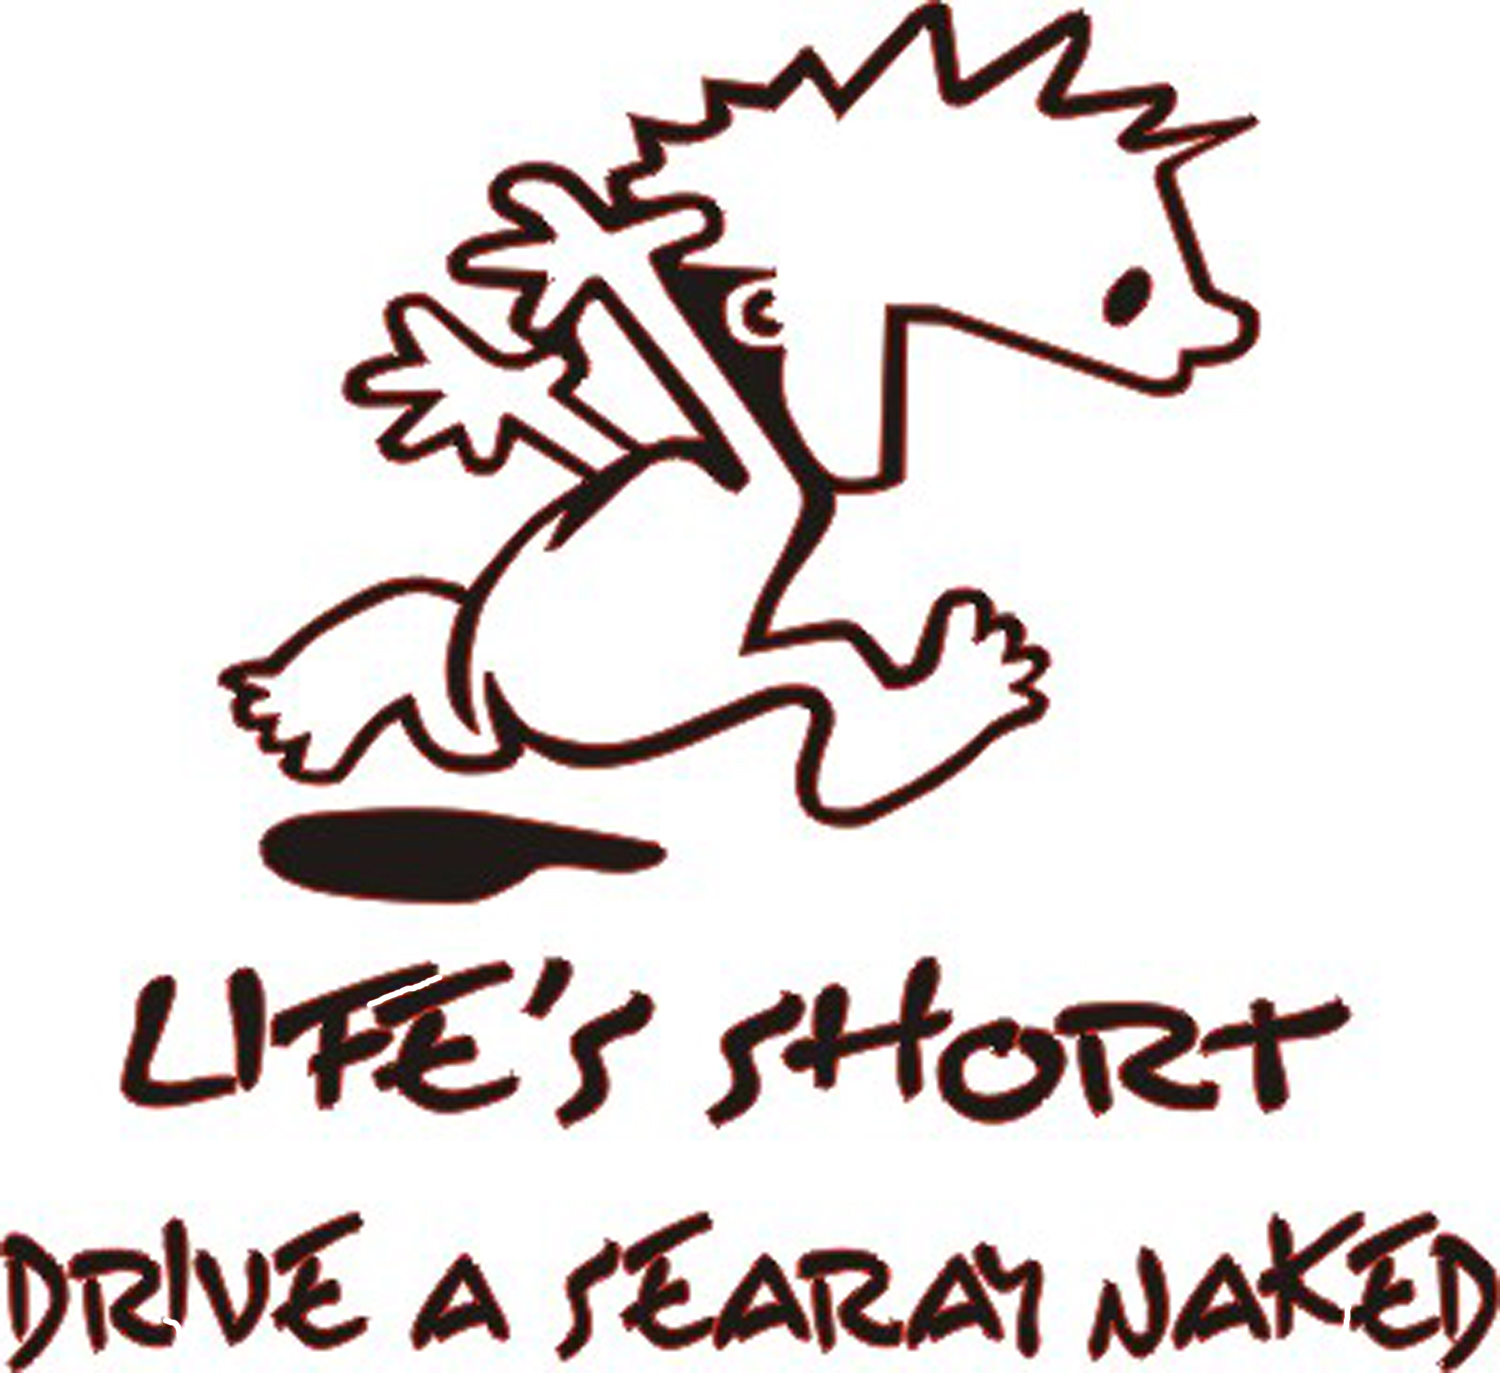 Lifes Short, Drive a Searay Naked Sticker